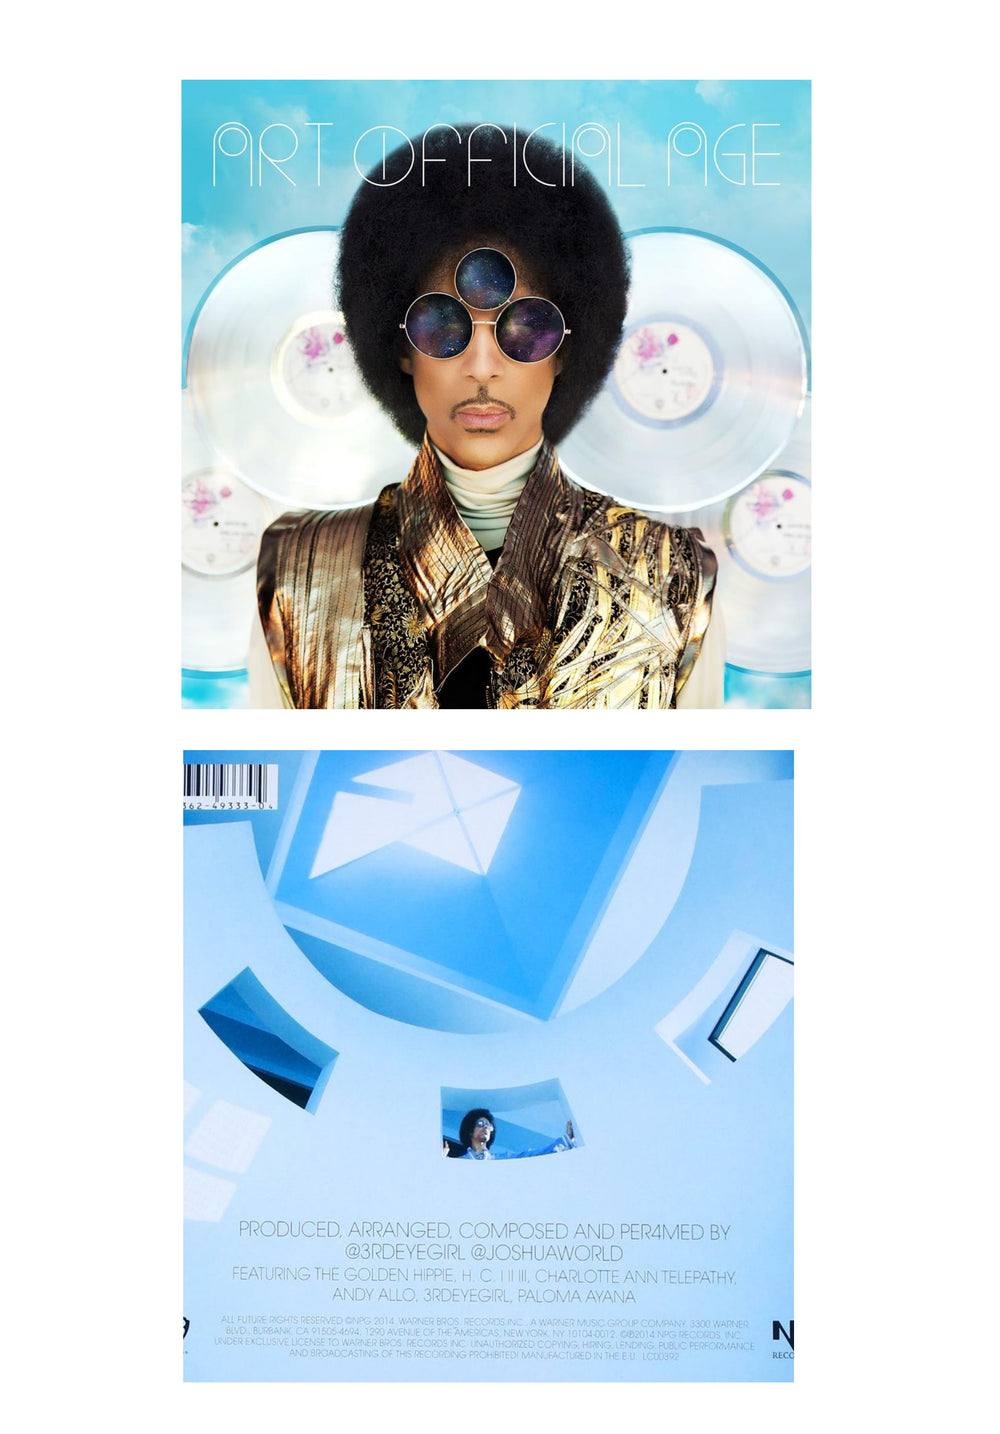 Prince ART OFFICIAL AGE Compact Disc Album Cardboard Slip Case